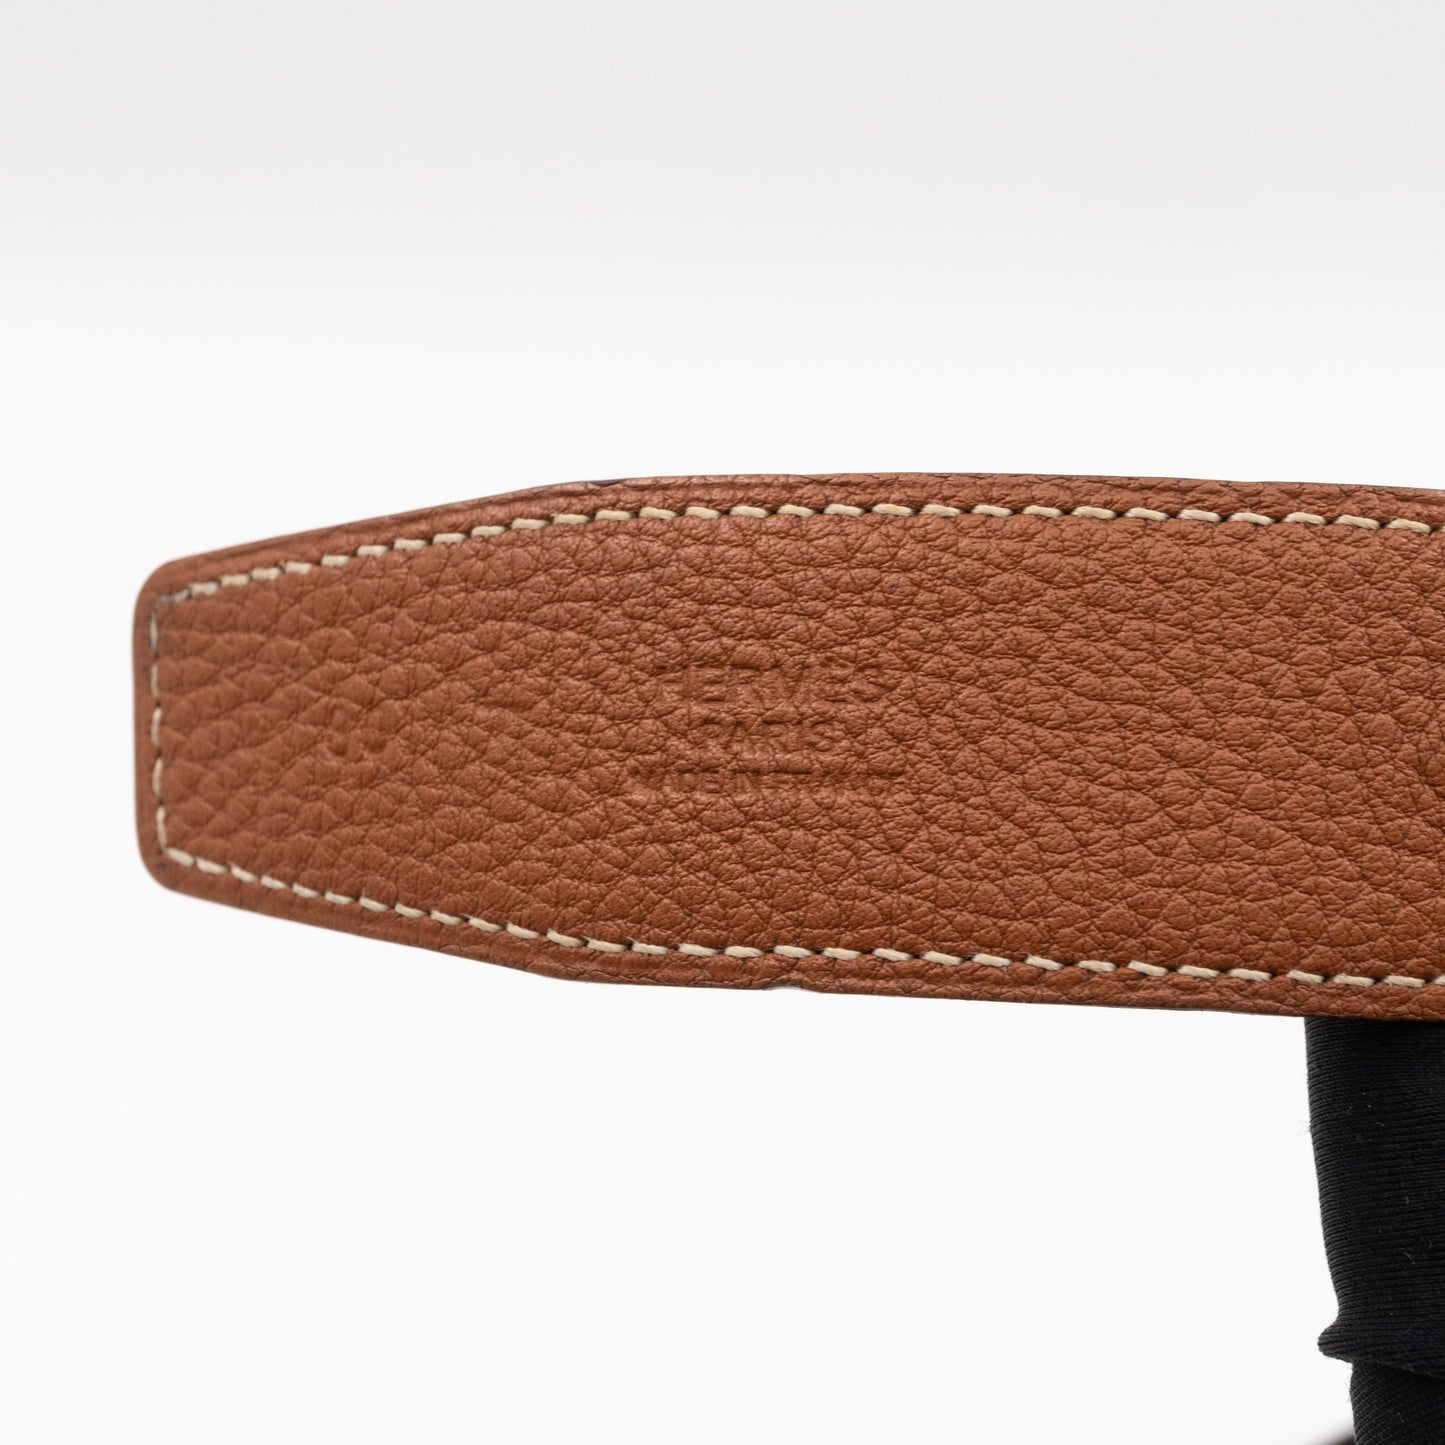 H Martelee Buckle & Reversible Gold and Black Leather Belt 80 cm